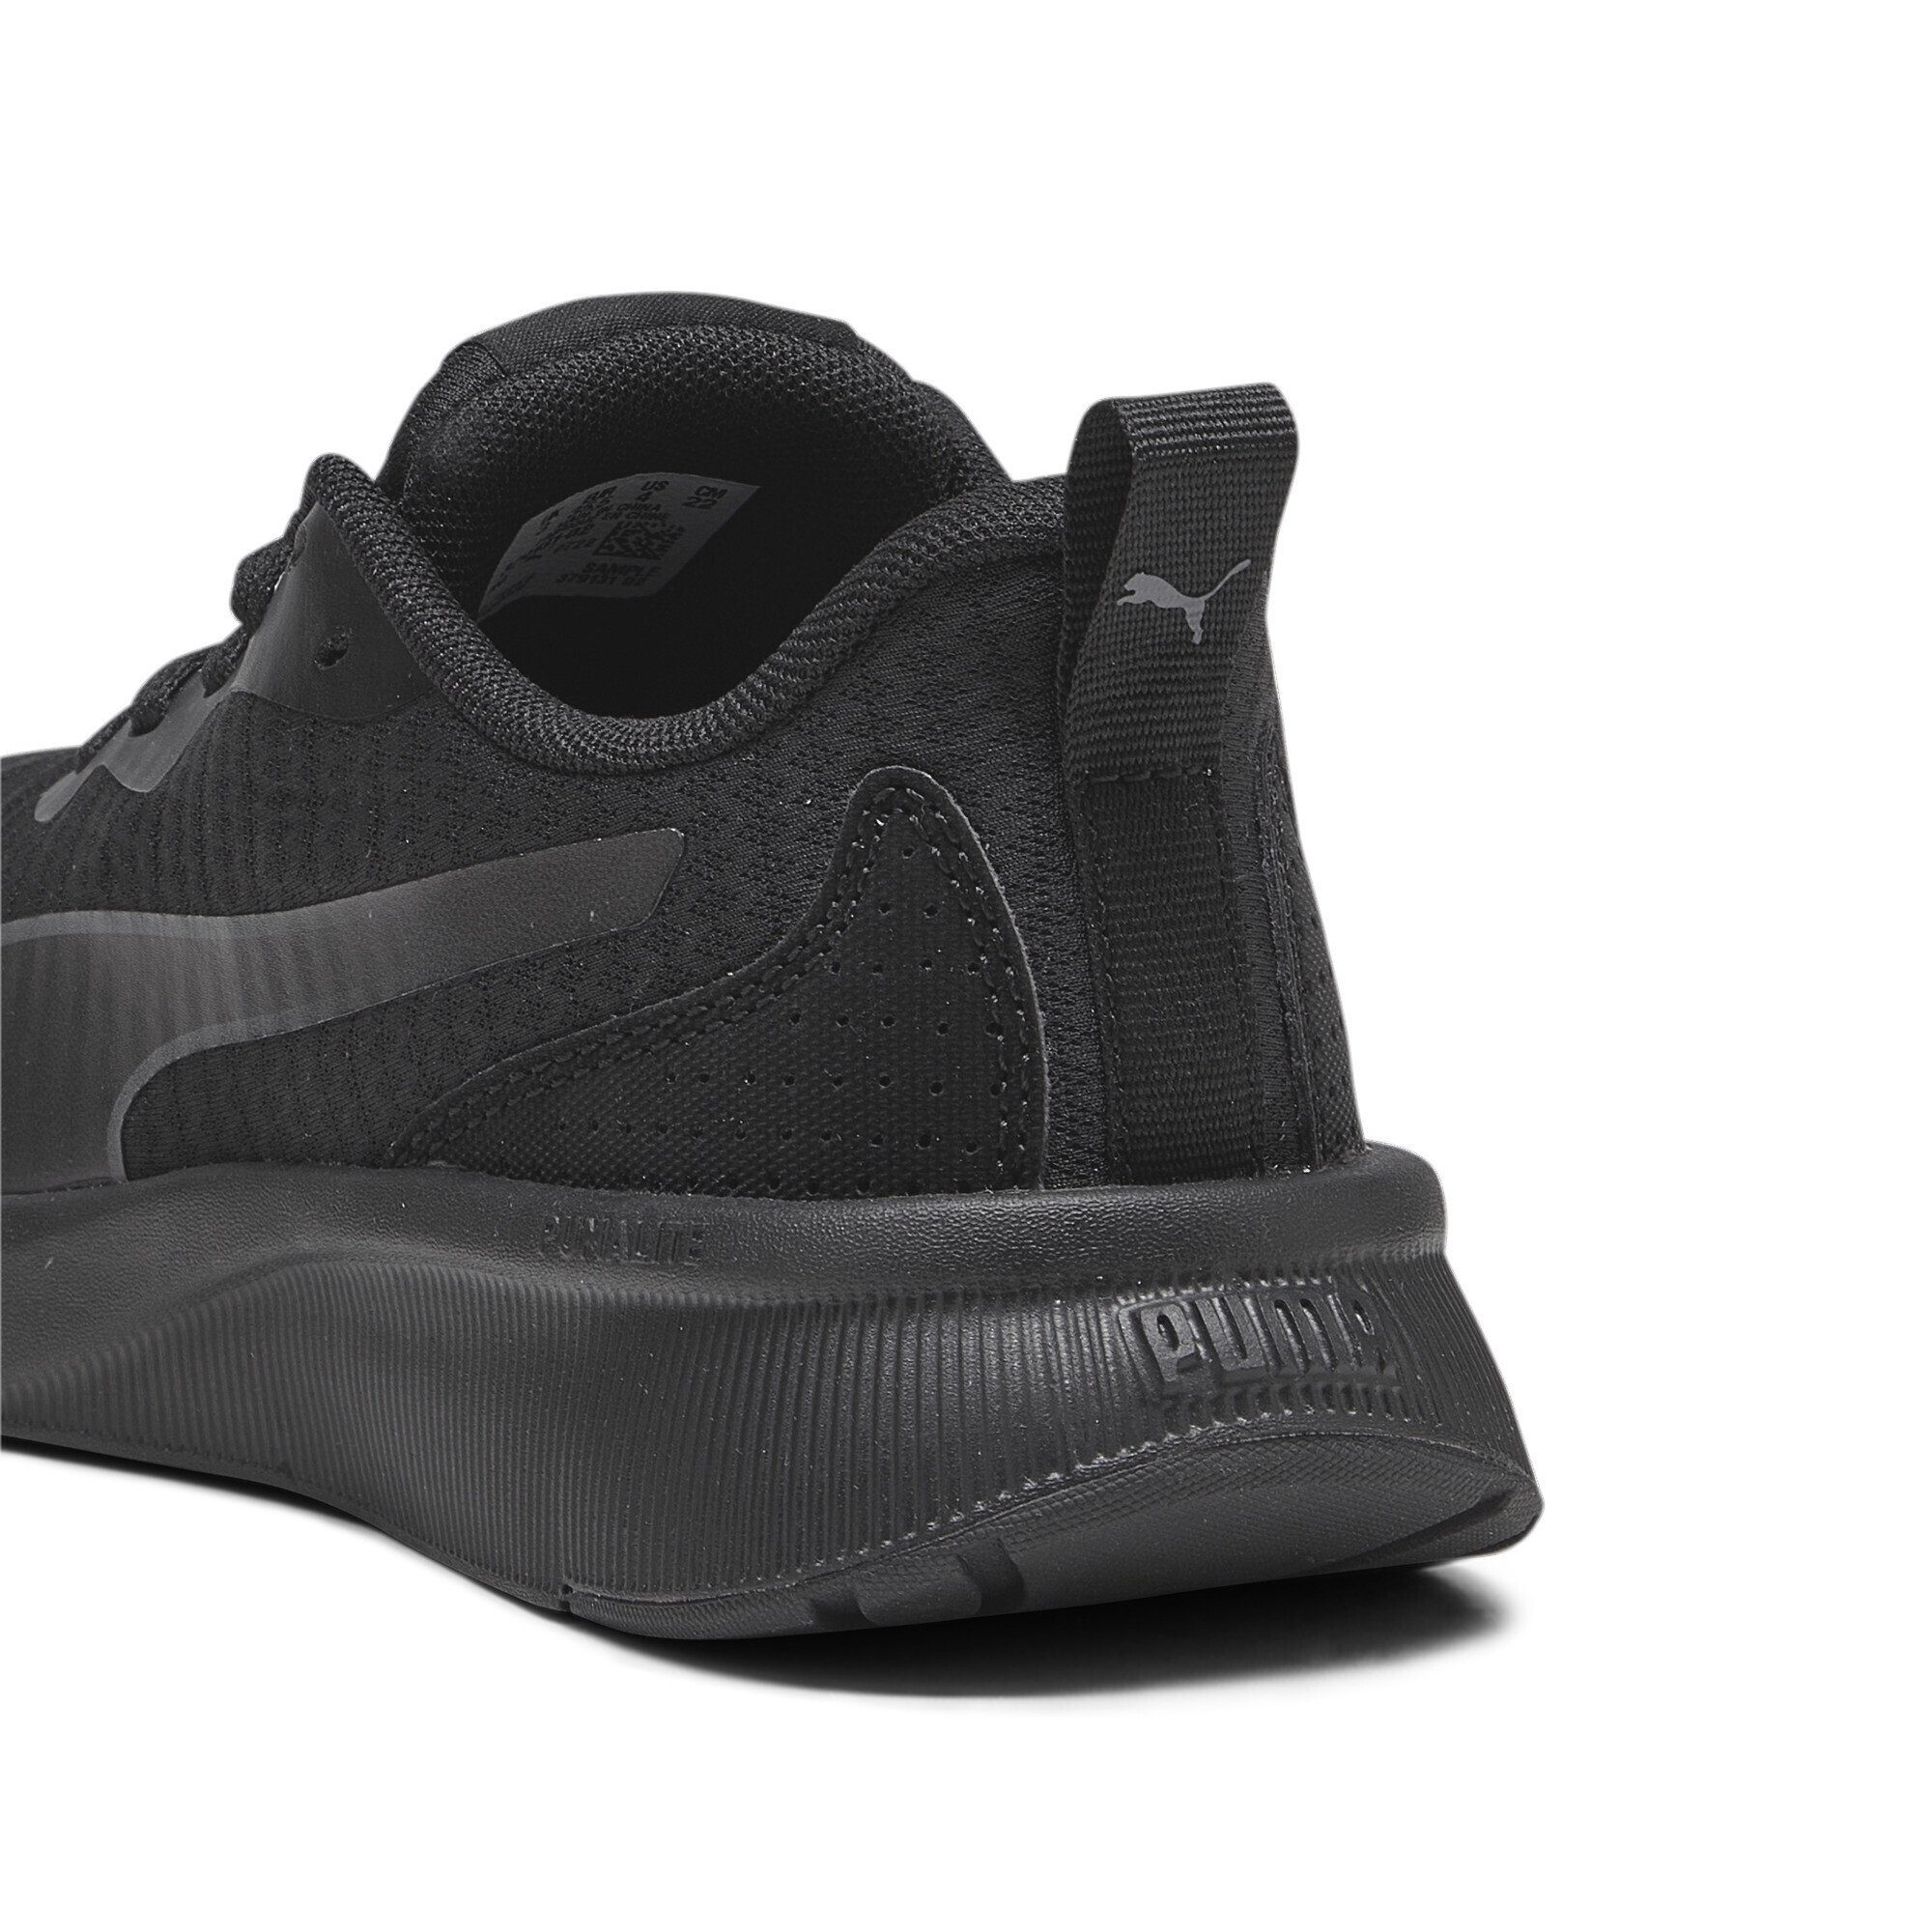 Gray Black PUMA Jugendliche Cool Lite Trainingsschuh Dark Sneakers Flyer